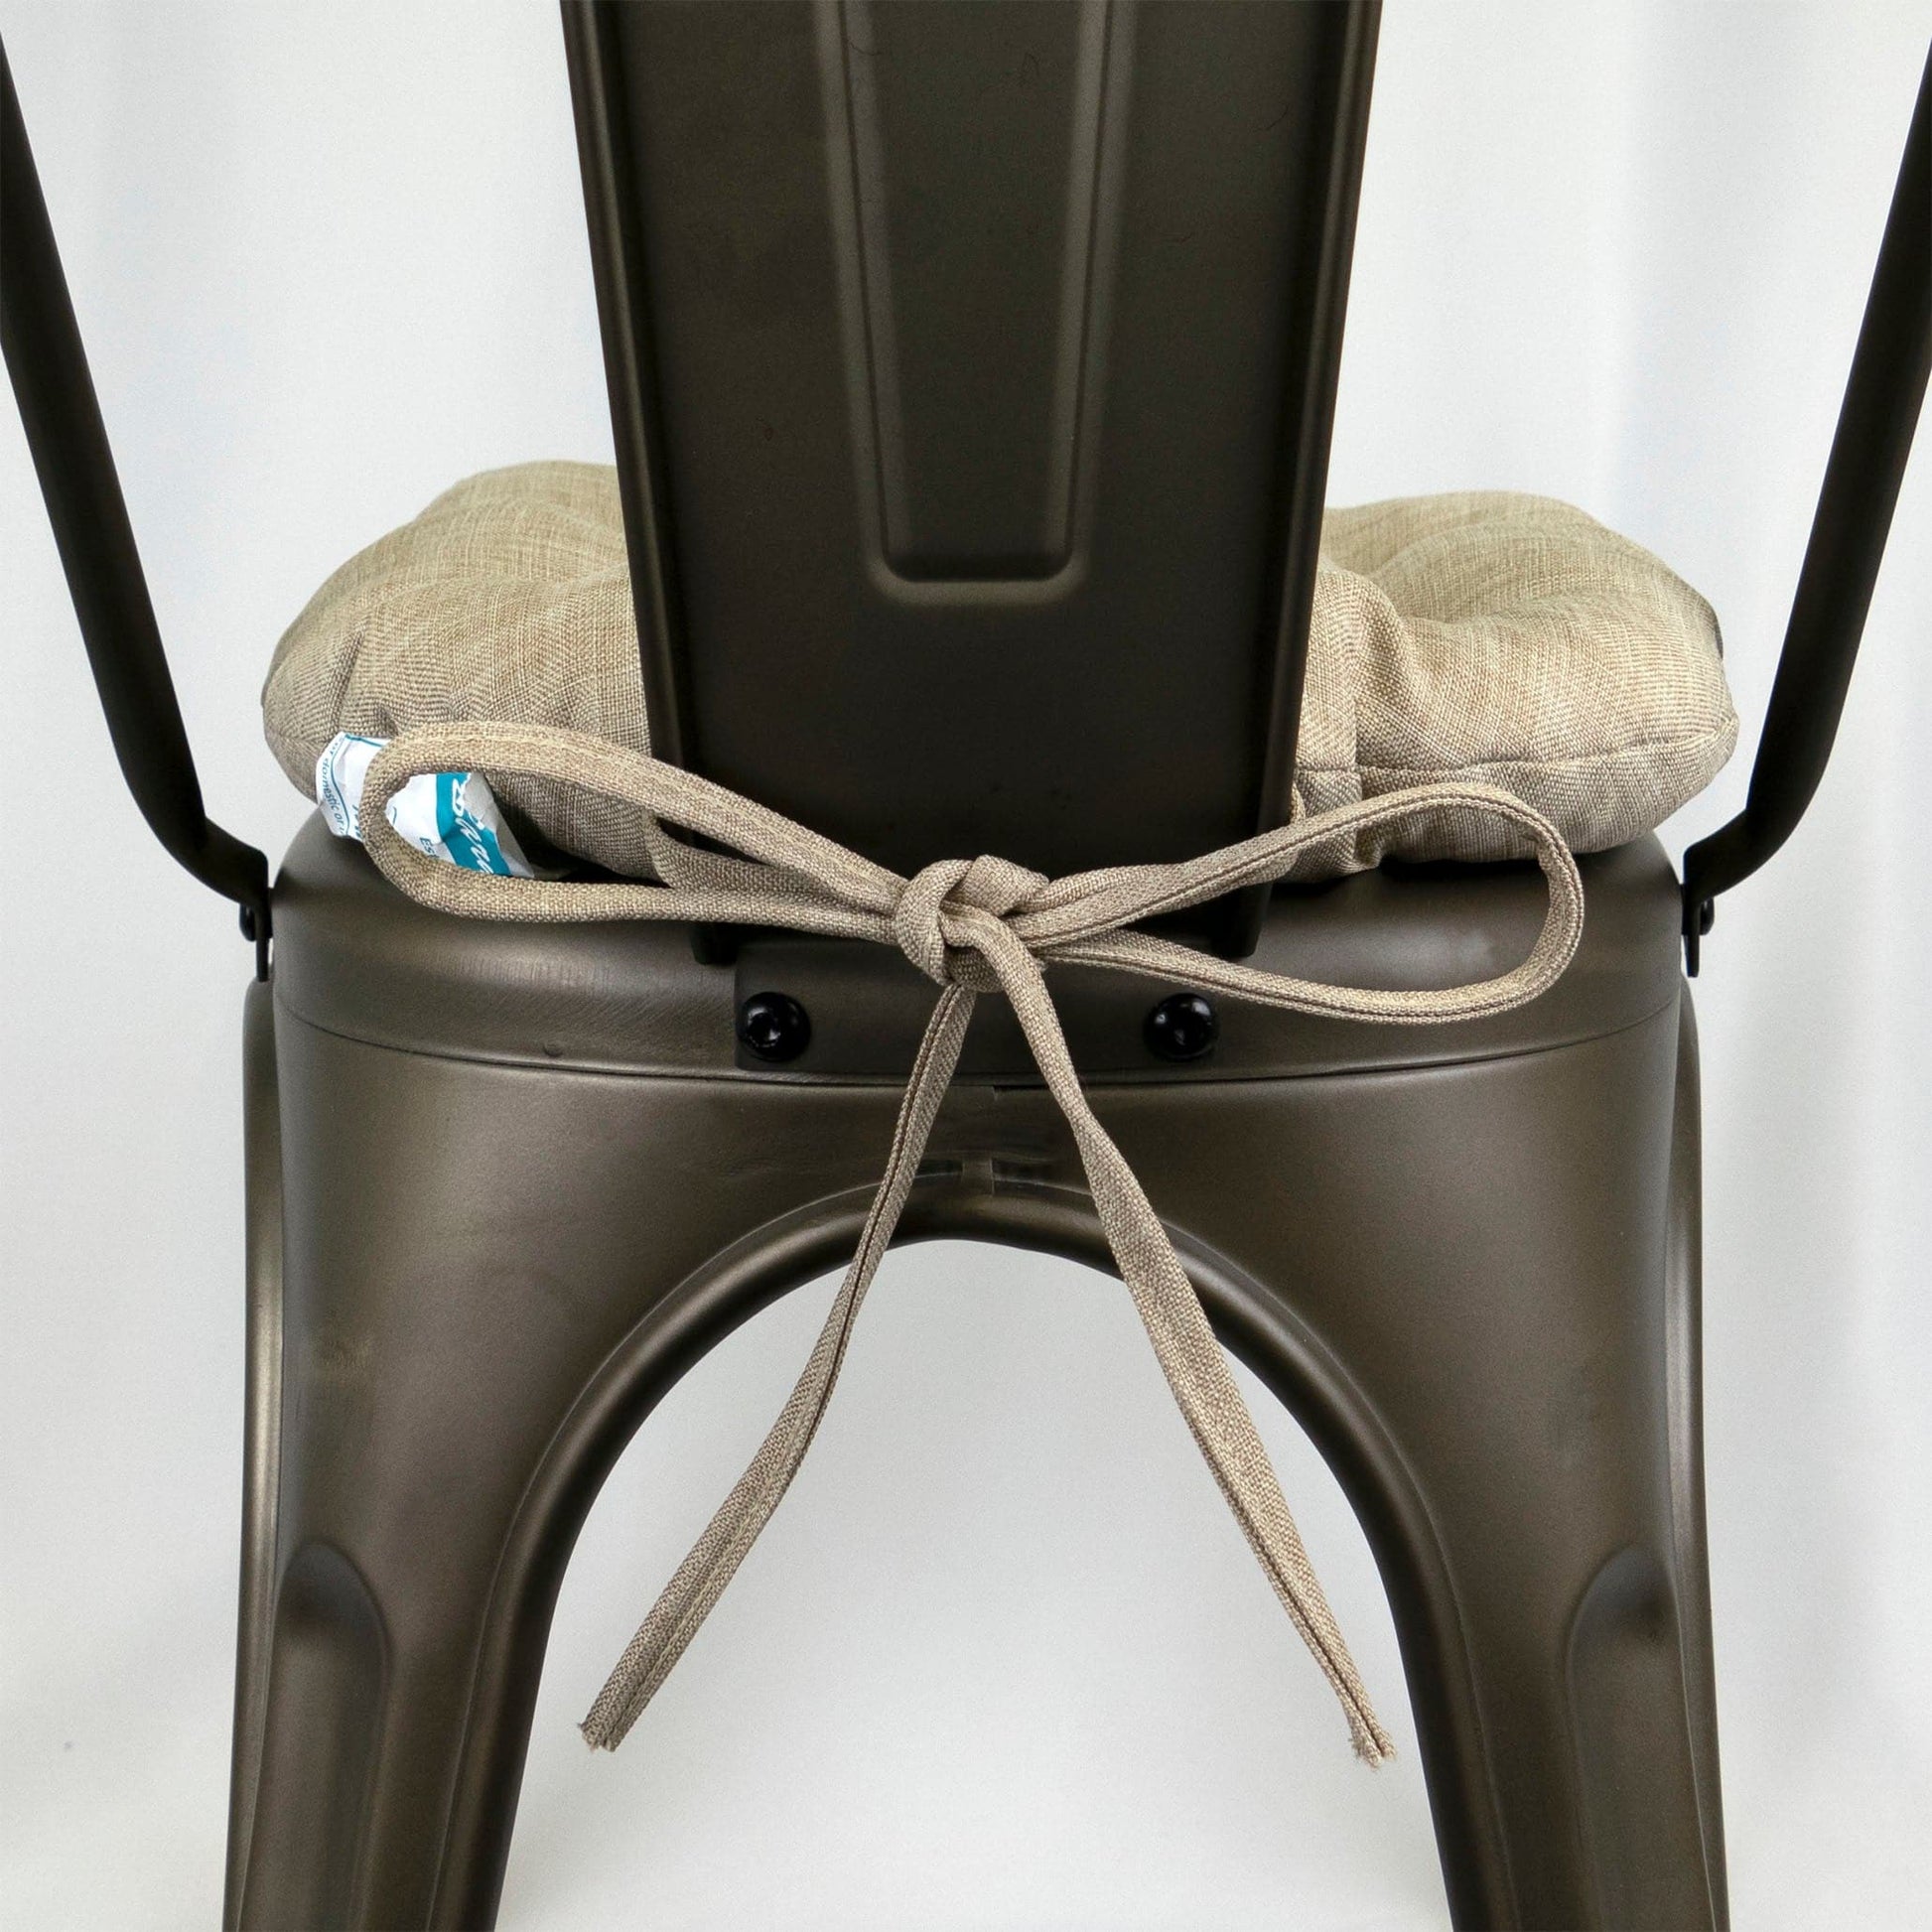 Hayden Beige Dining Chair Pads - Latex Foam Fill - Reversible